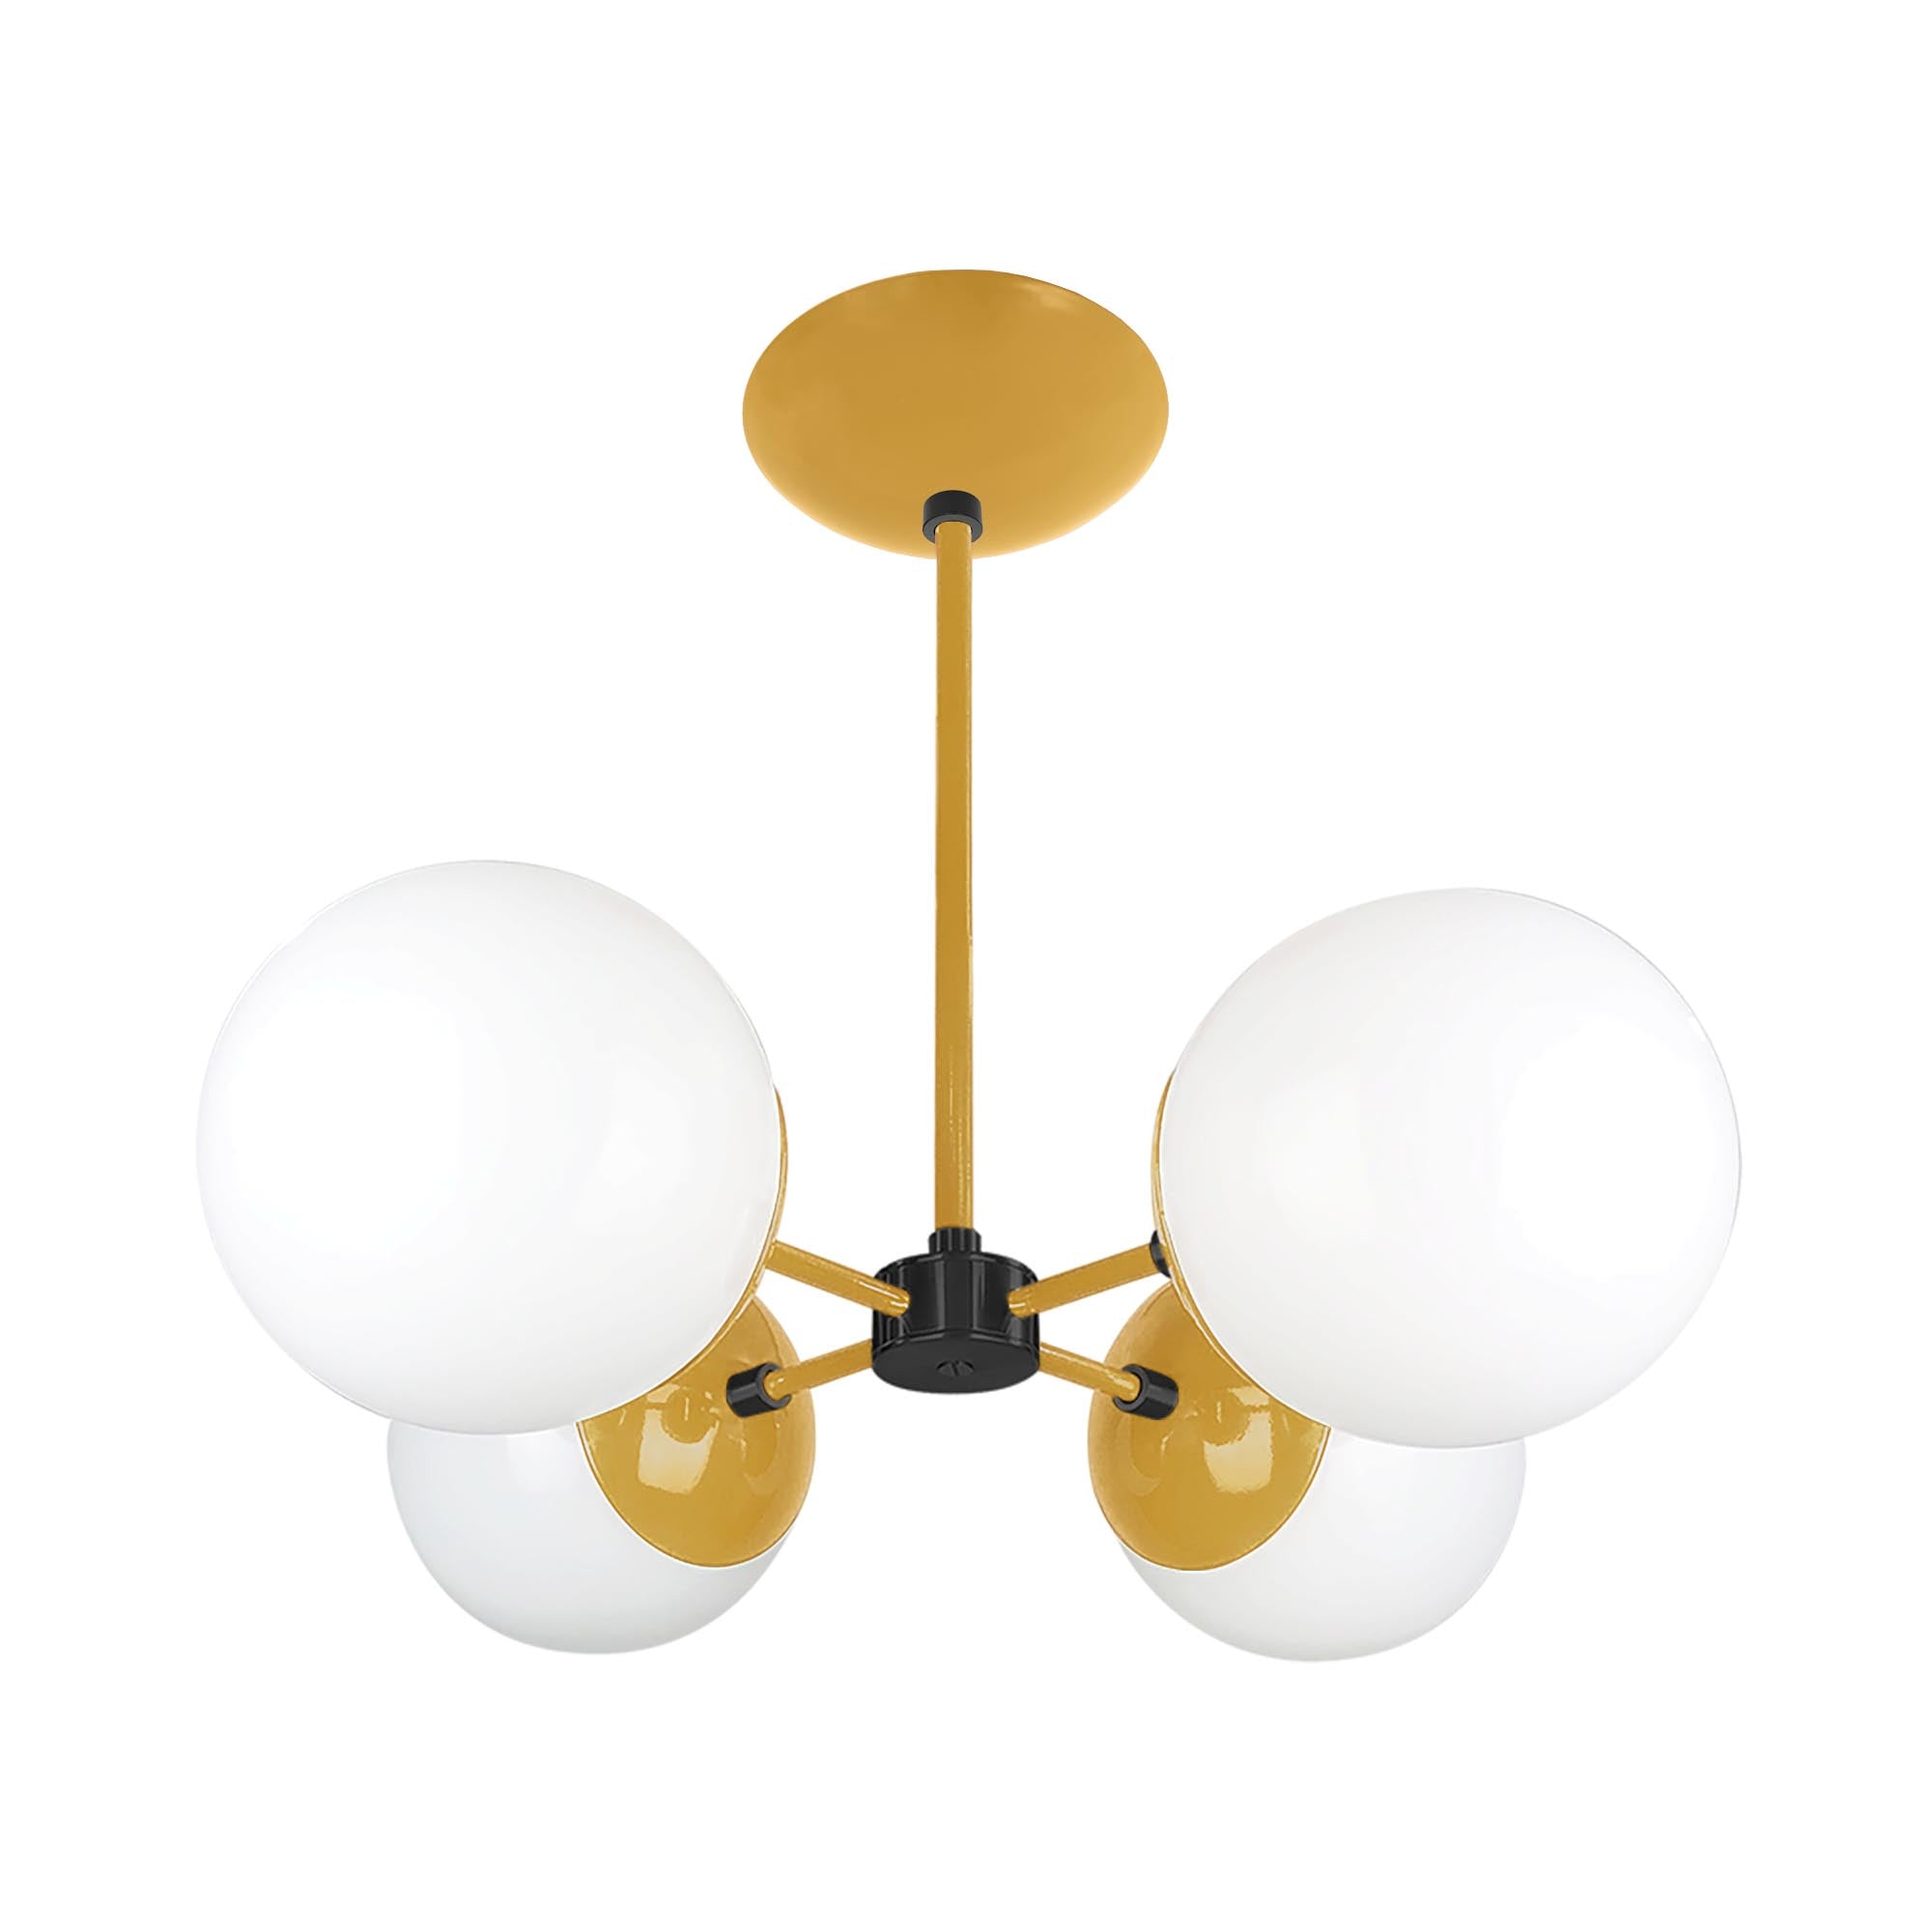 Black and ochre color Orbi chandelier Dutton Brown lighting